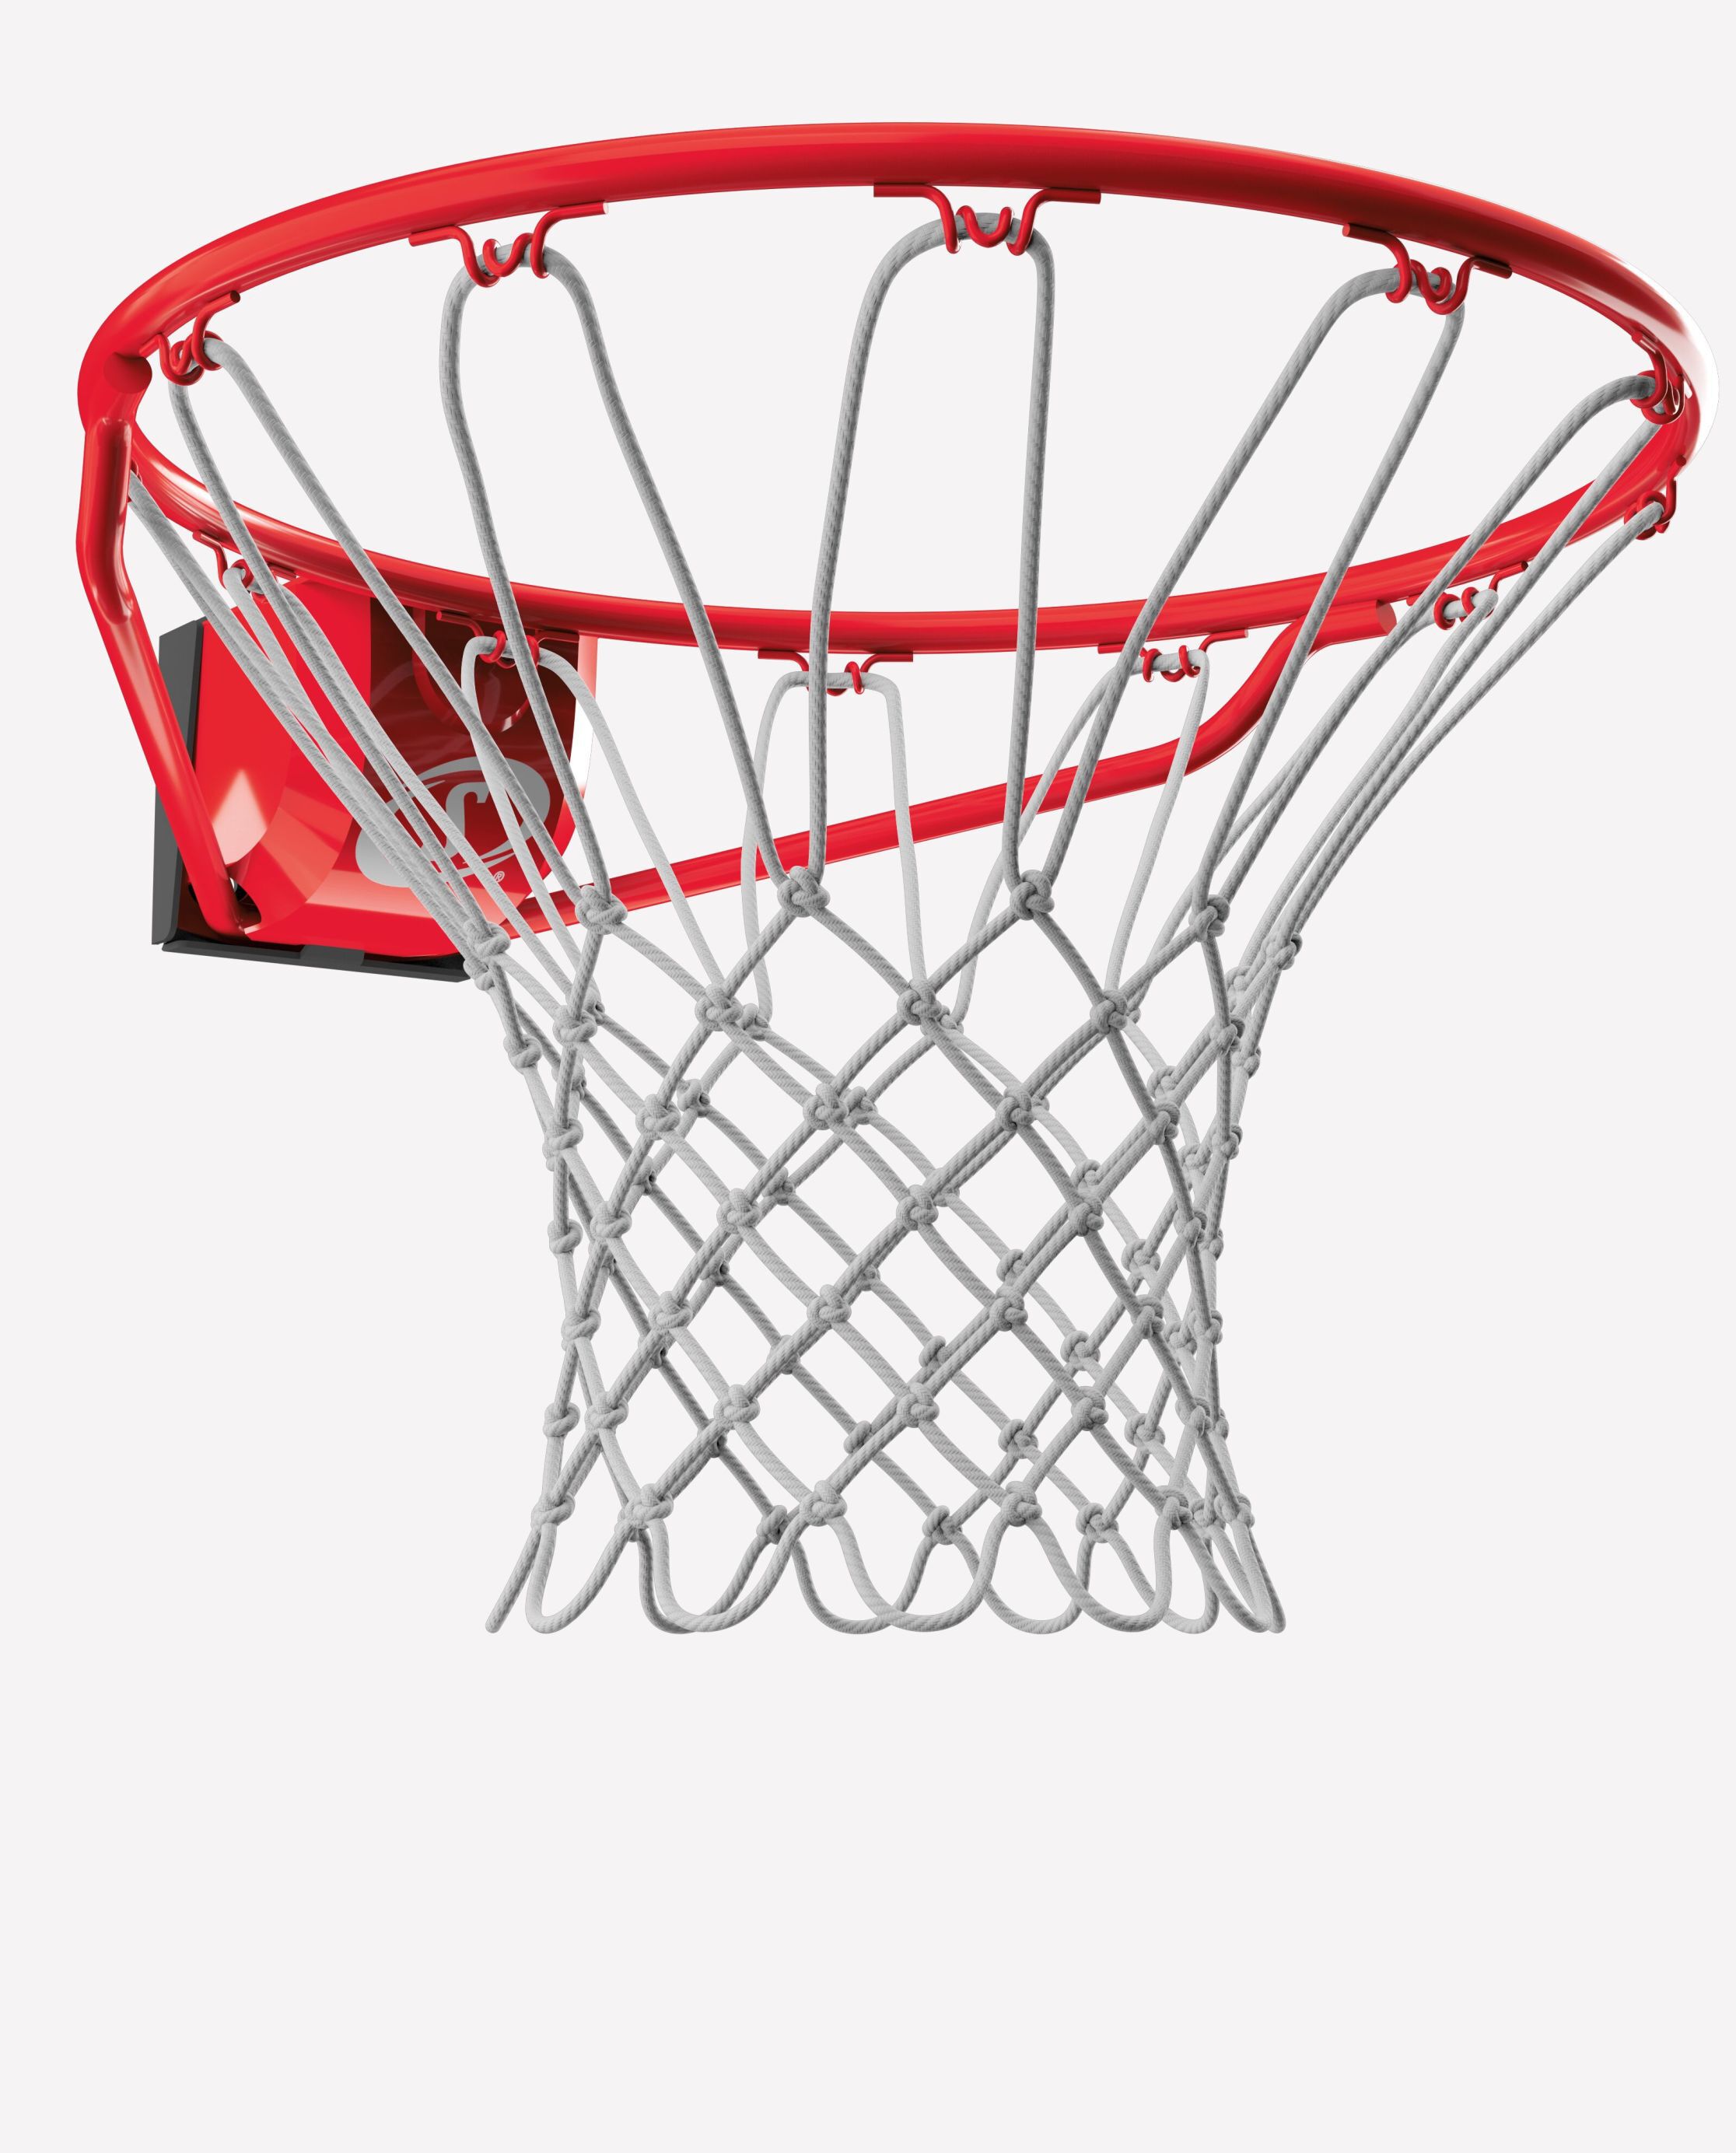 Details about   54" Basketball Hoop Portable Goal Pro Slam Breakaway Rim Backboard Adjustable 